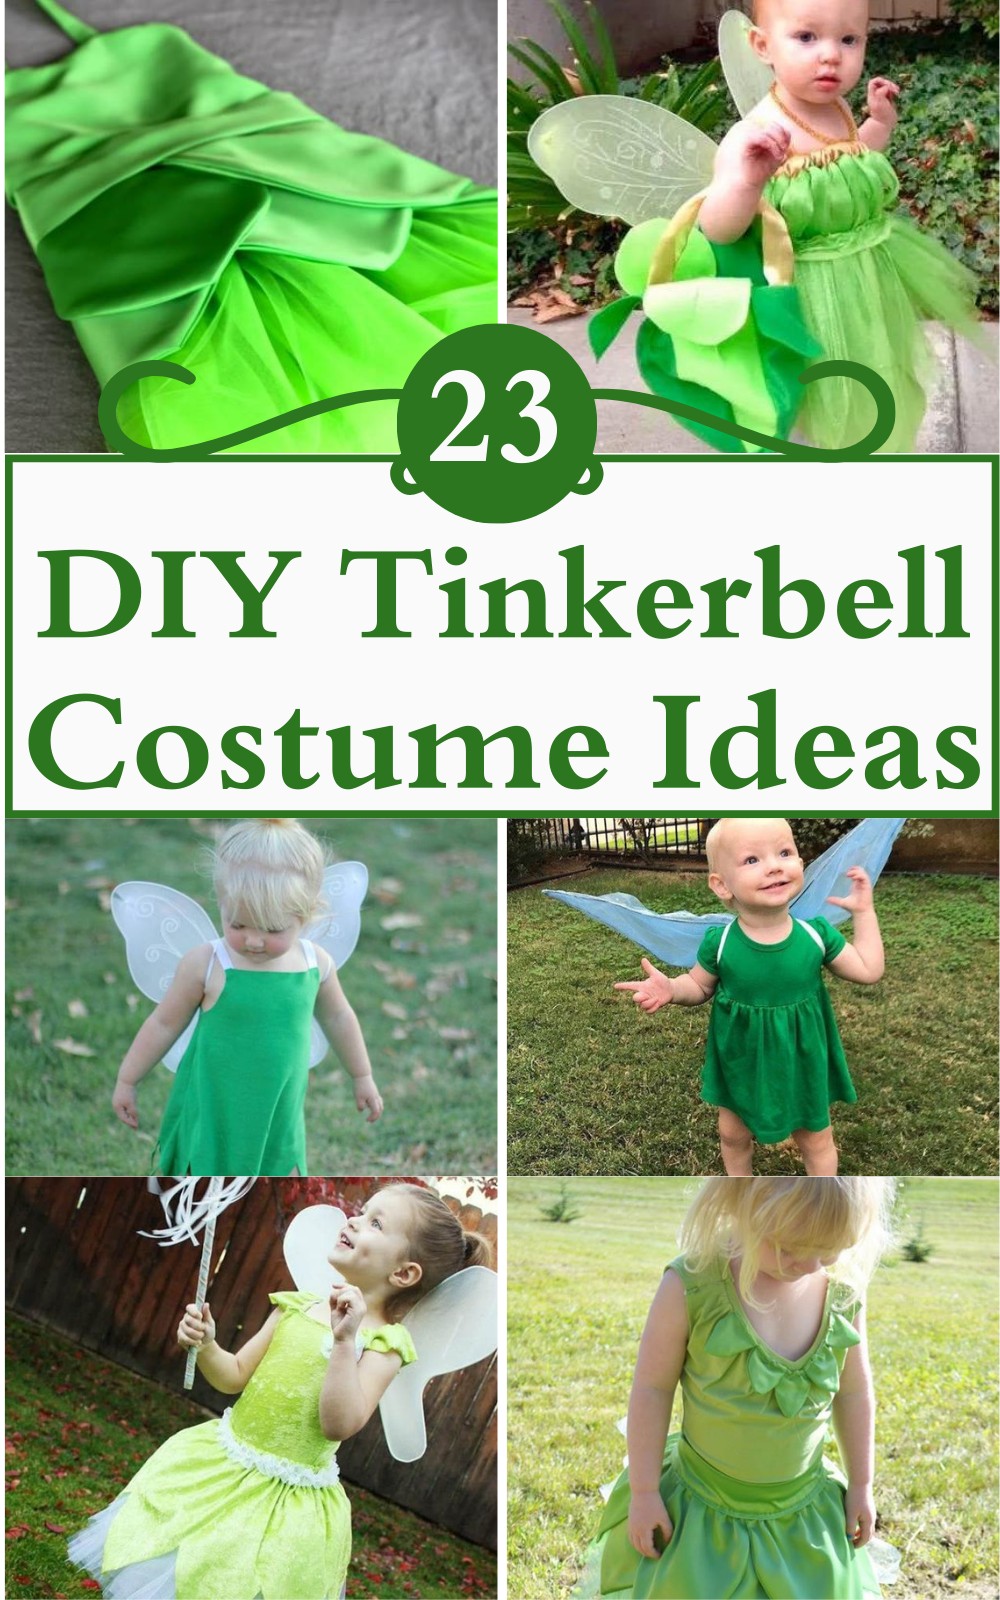 23 DIY Tinkerbell Costume Ideas